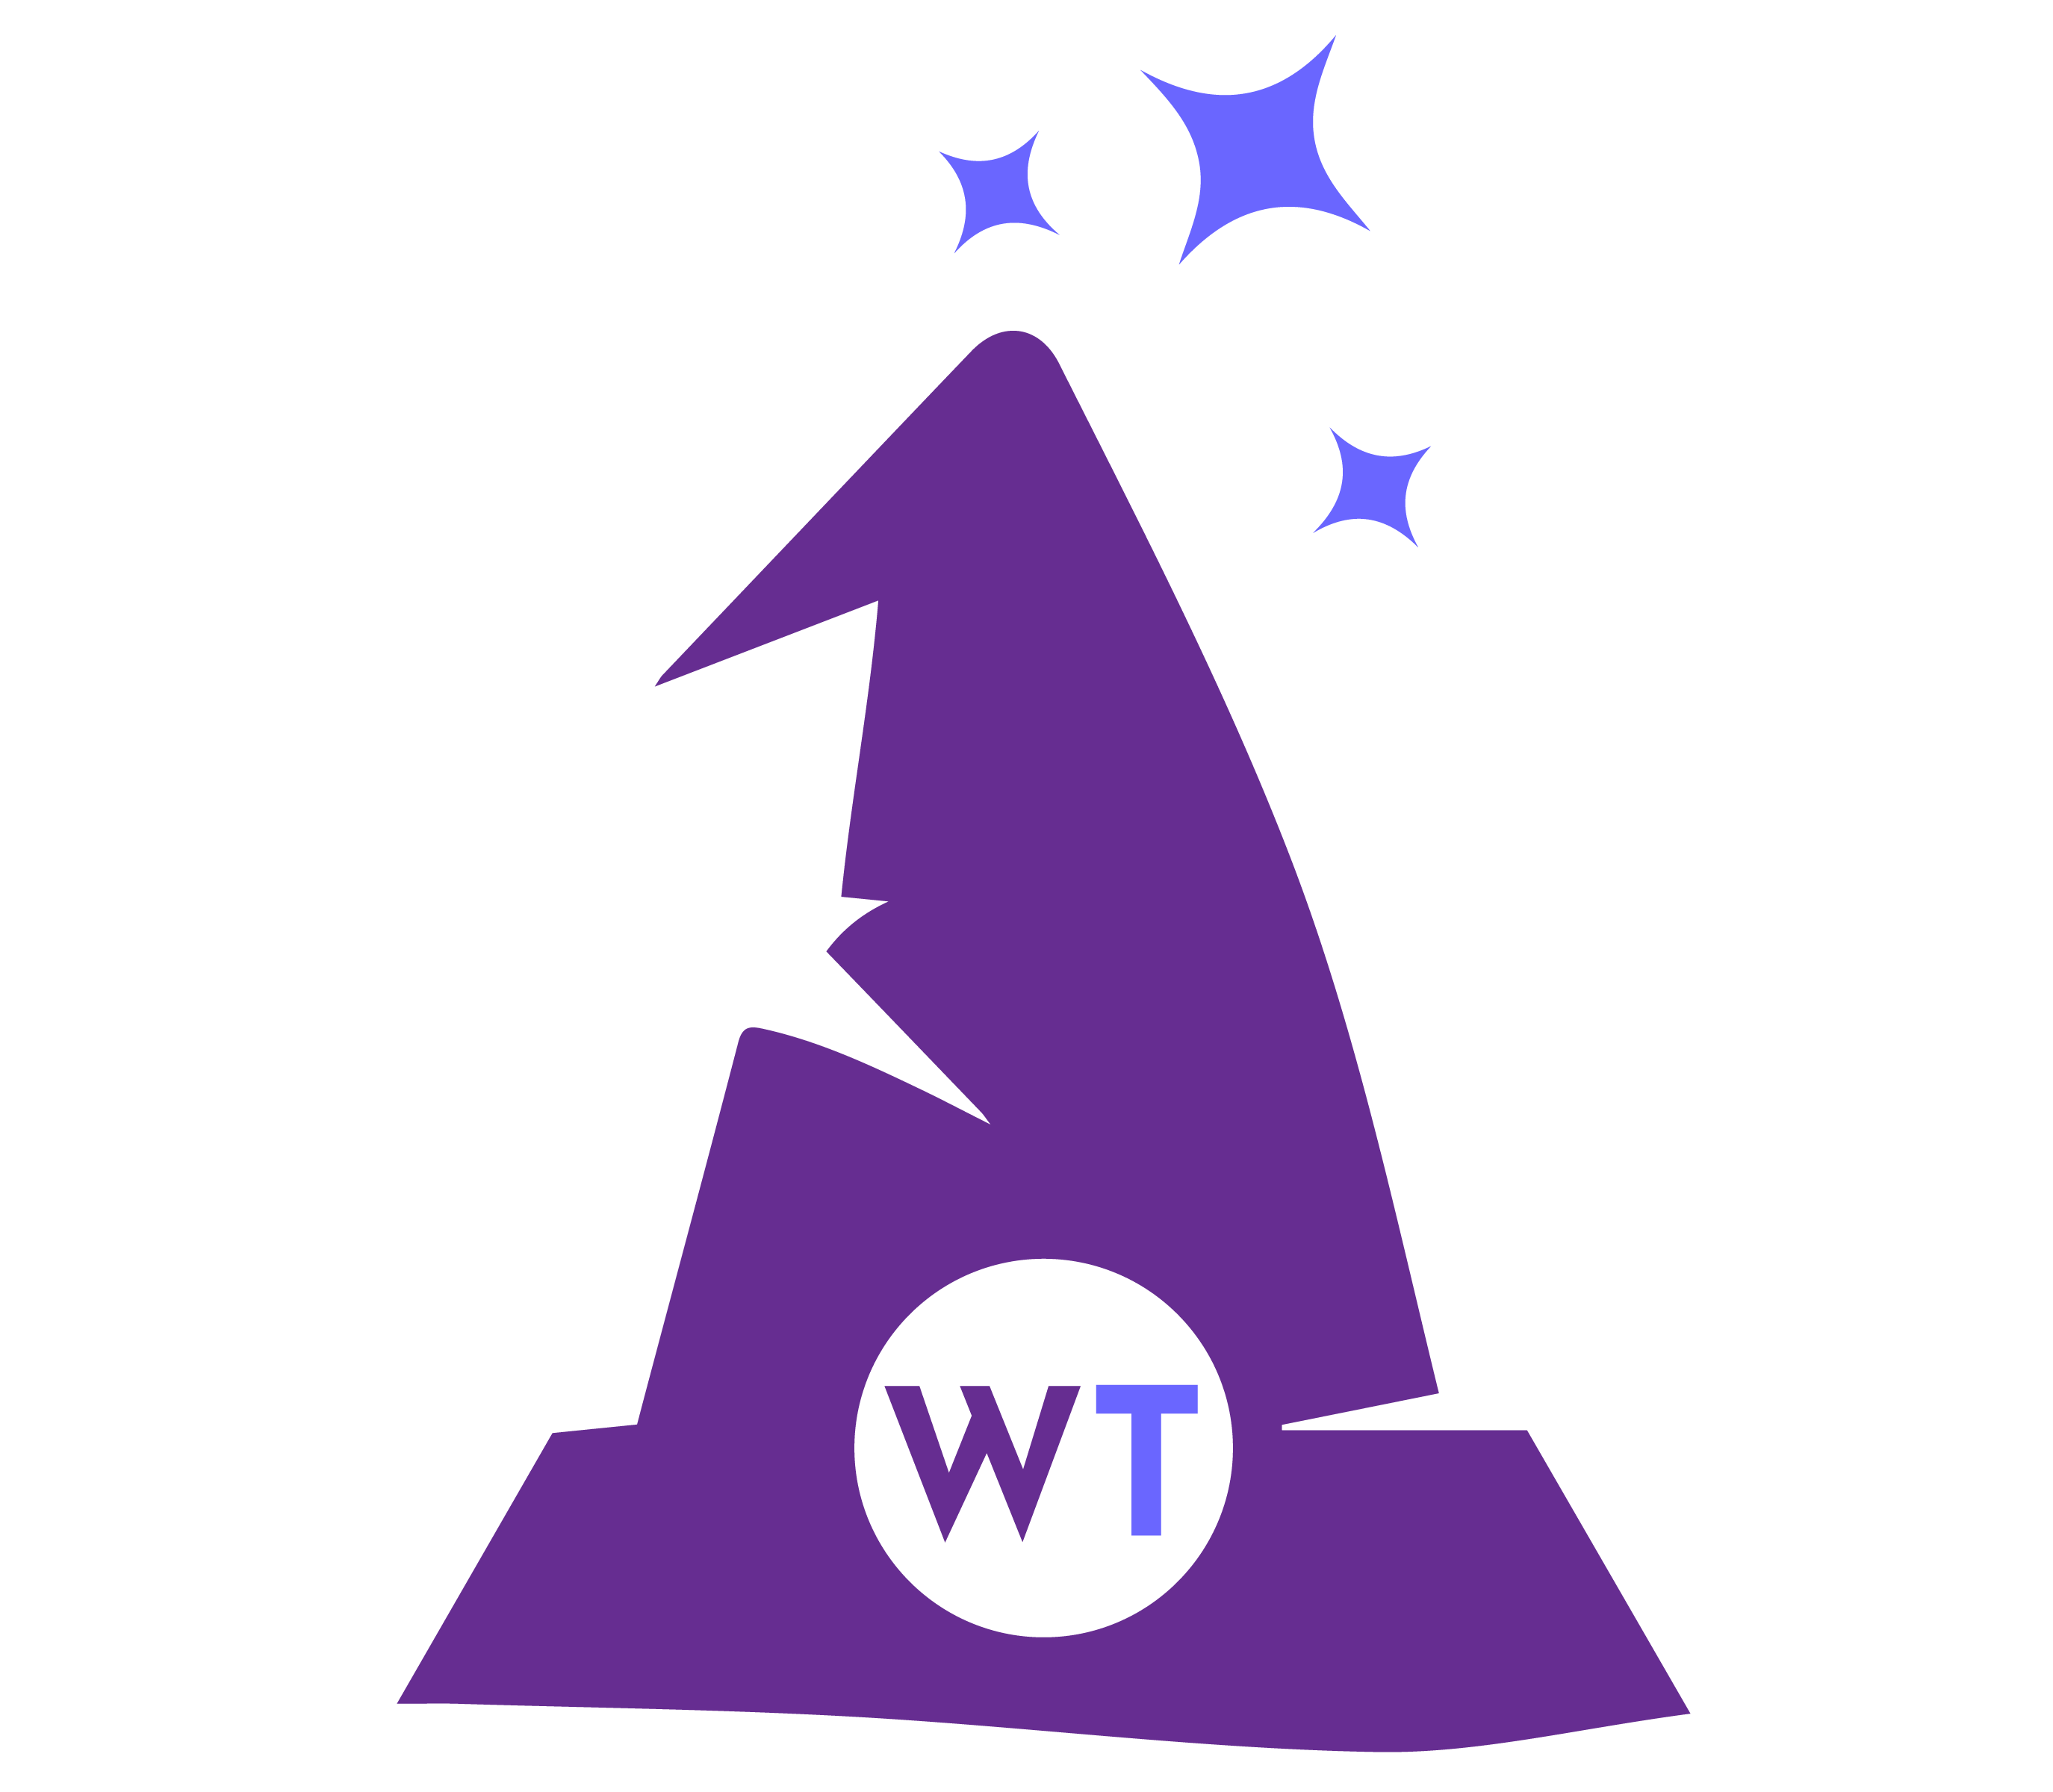 Wizards Toolkit logo